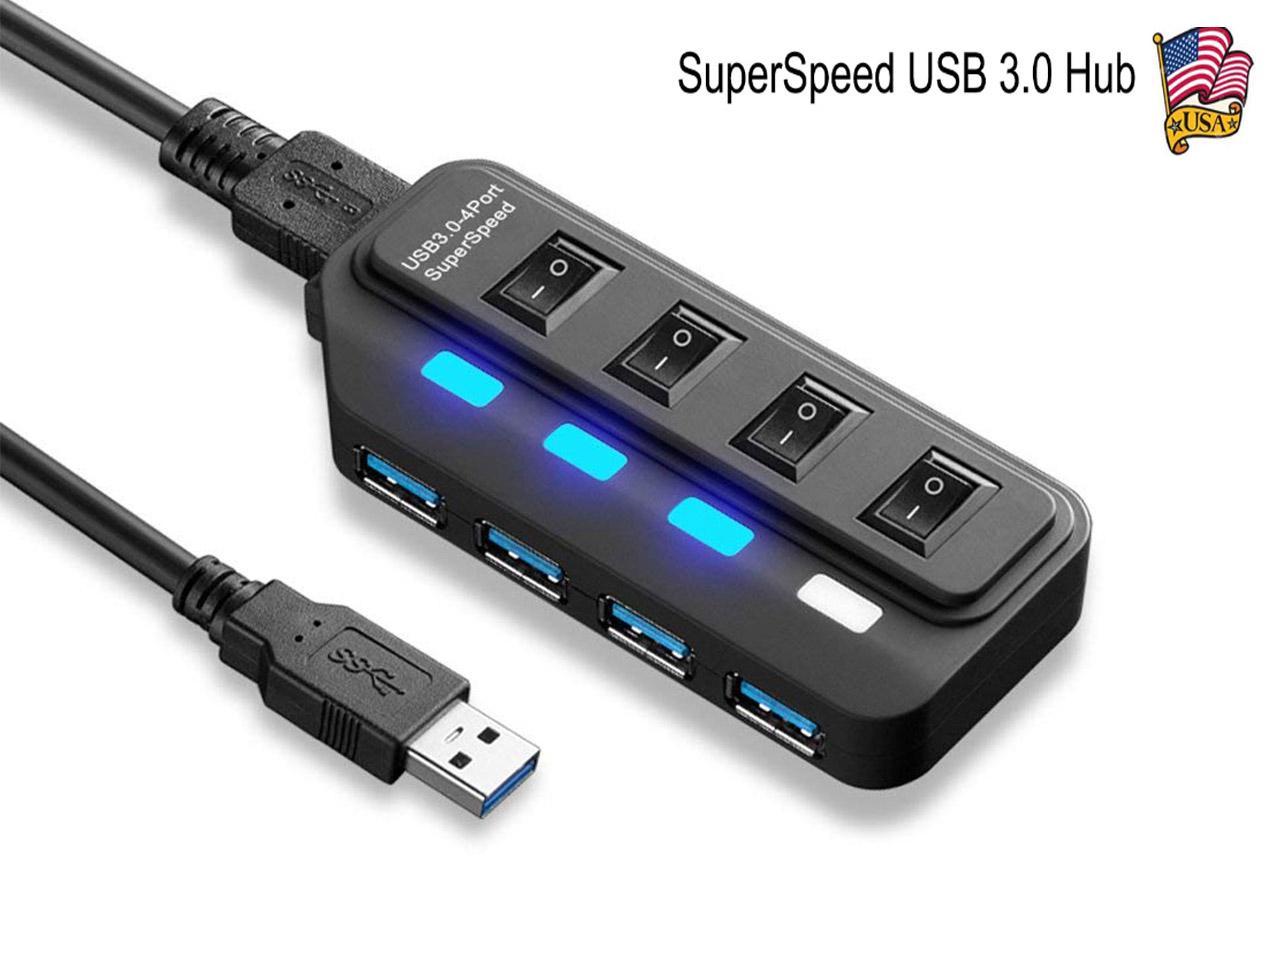 USB 3.0 Ports with Individual Power Switch USB HUB 7 Ports Data Splitter & Power Hub